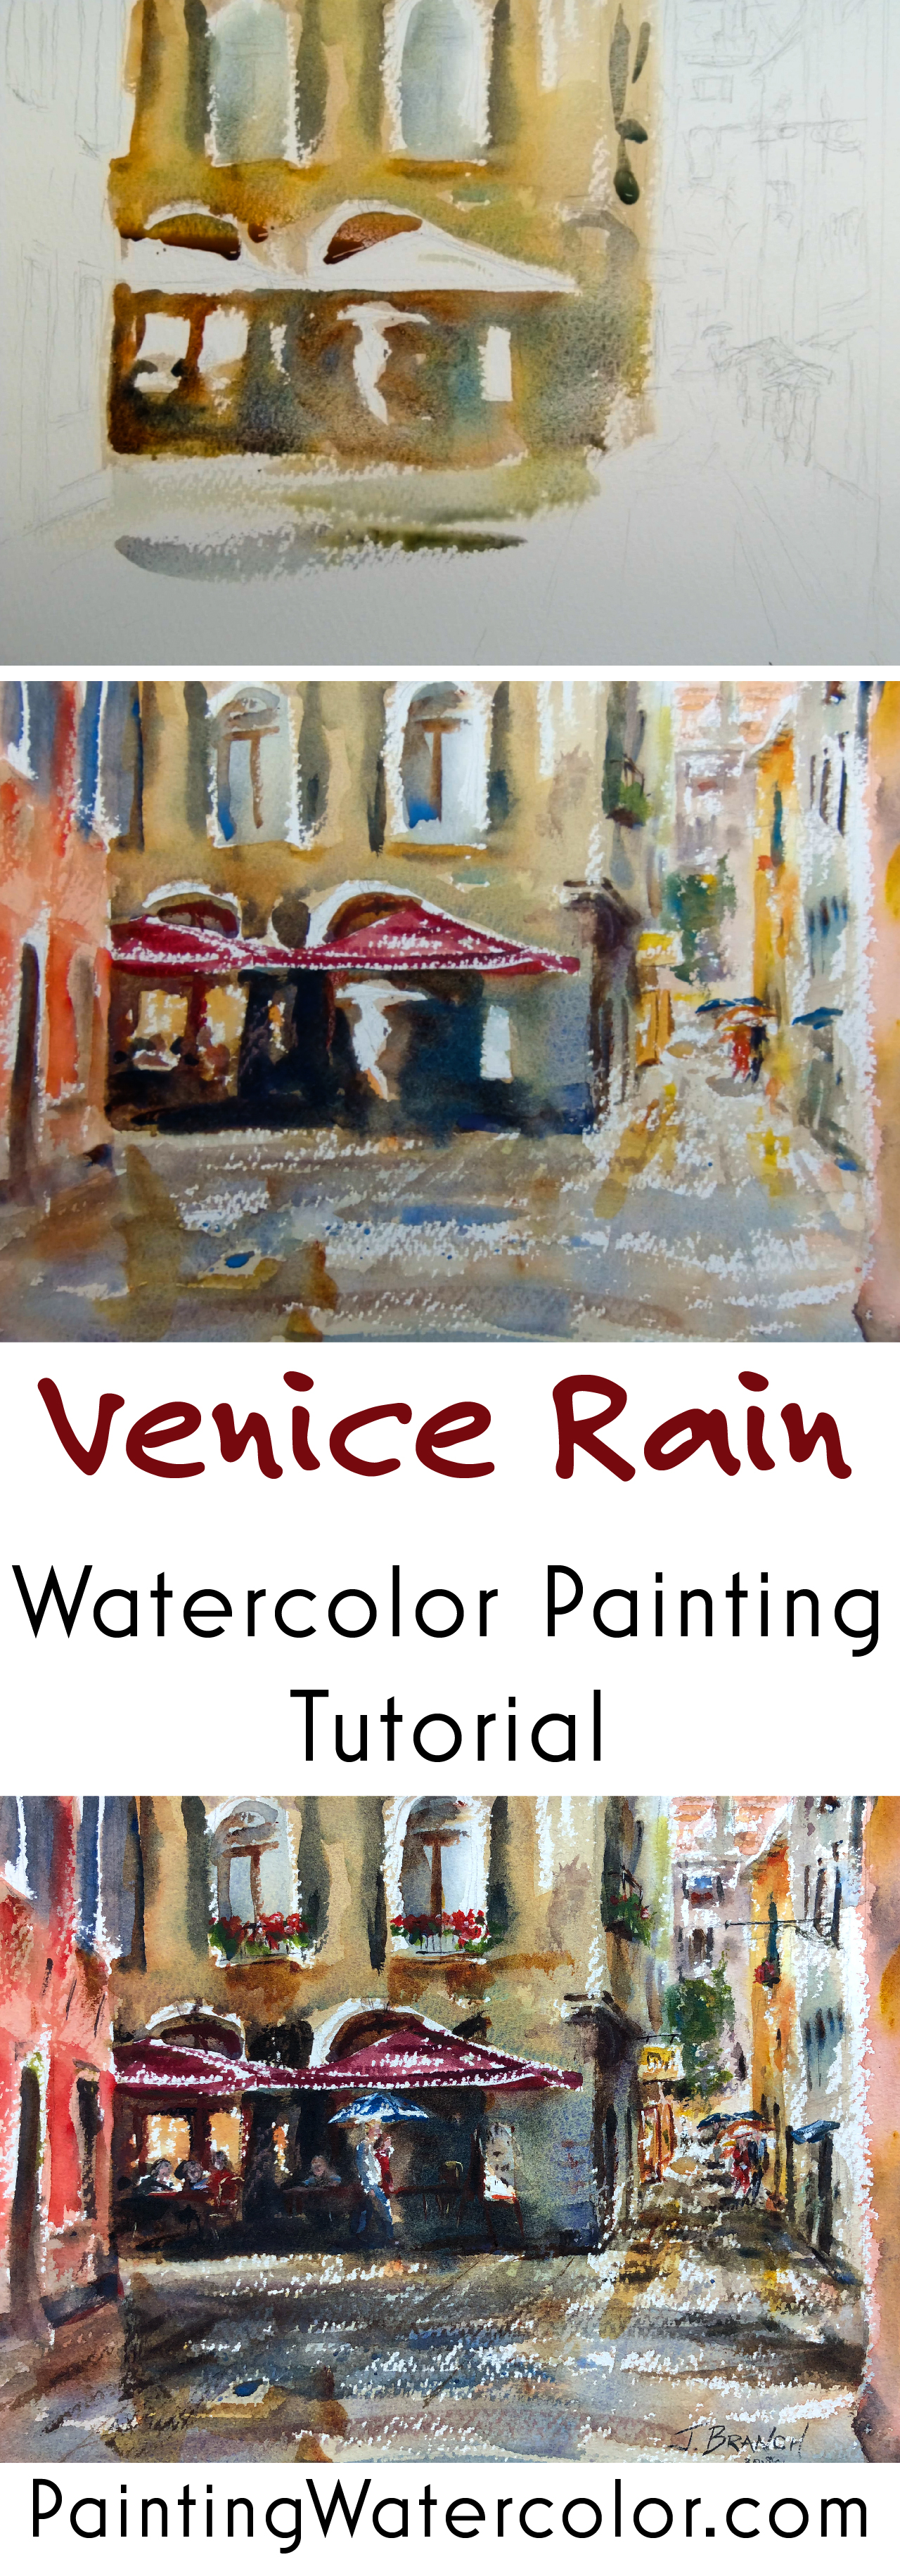 Venice Rain Painting Tutorial watercolor painting tutorial by Jennifer Branch